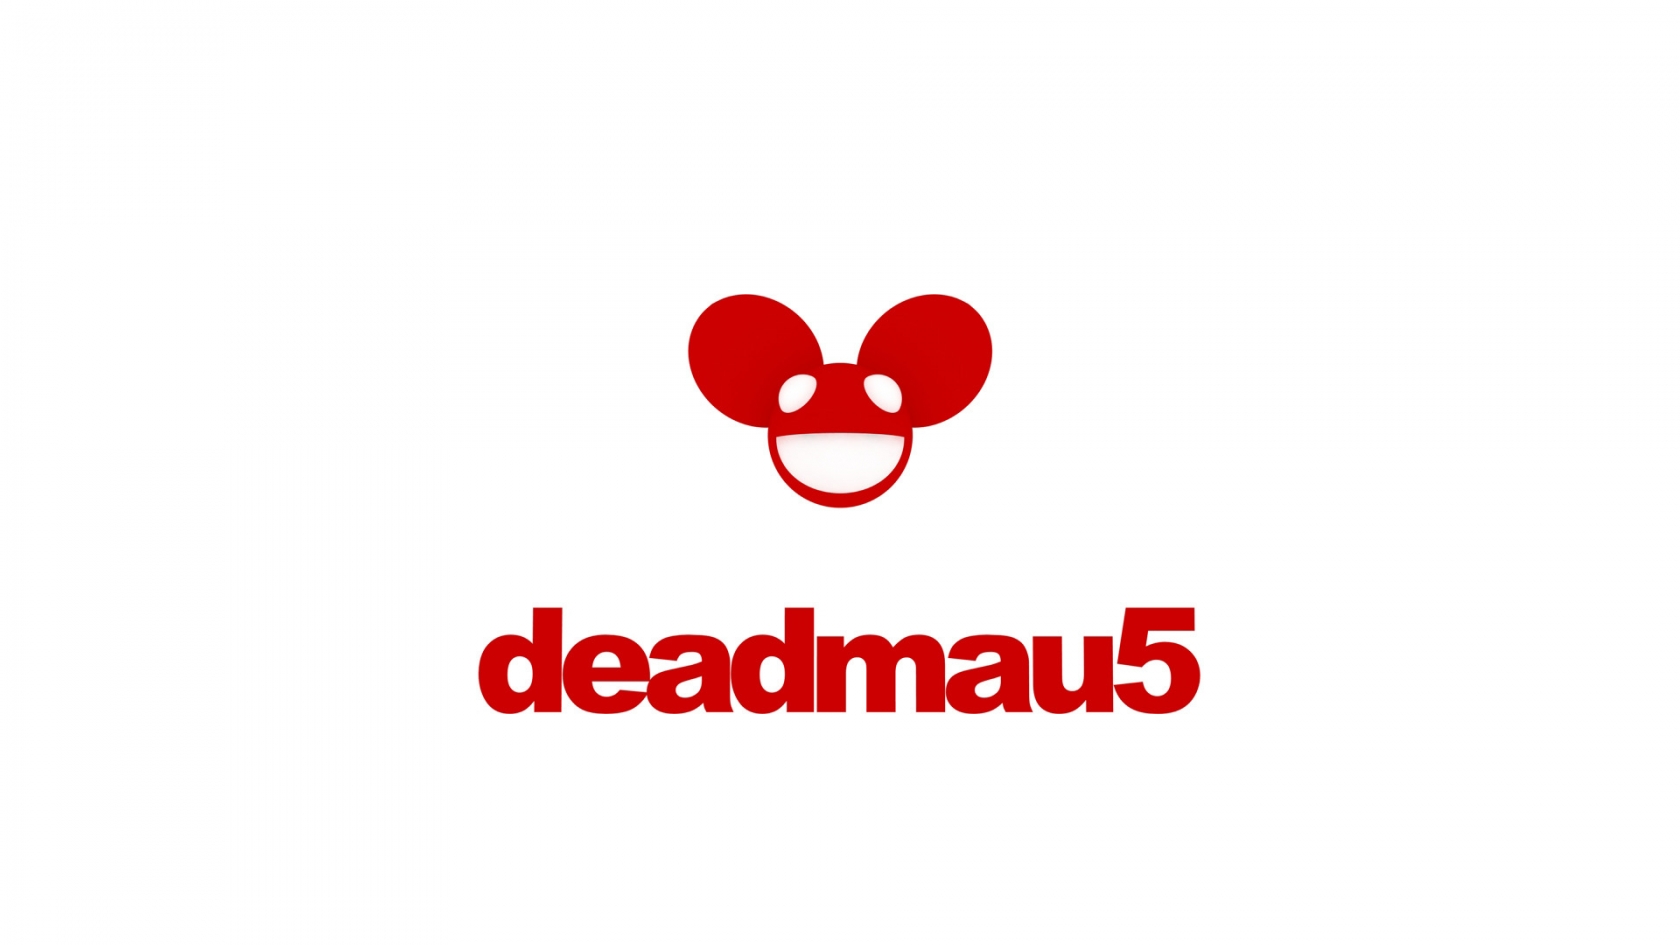 Deadmau5 Logo for 1680 x 945 HDTV resolution